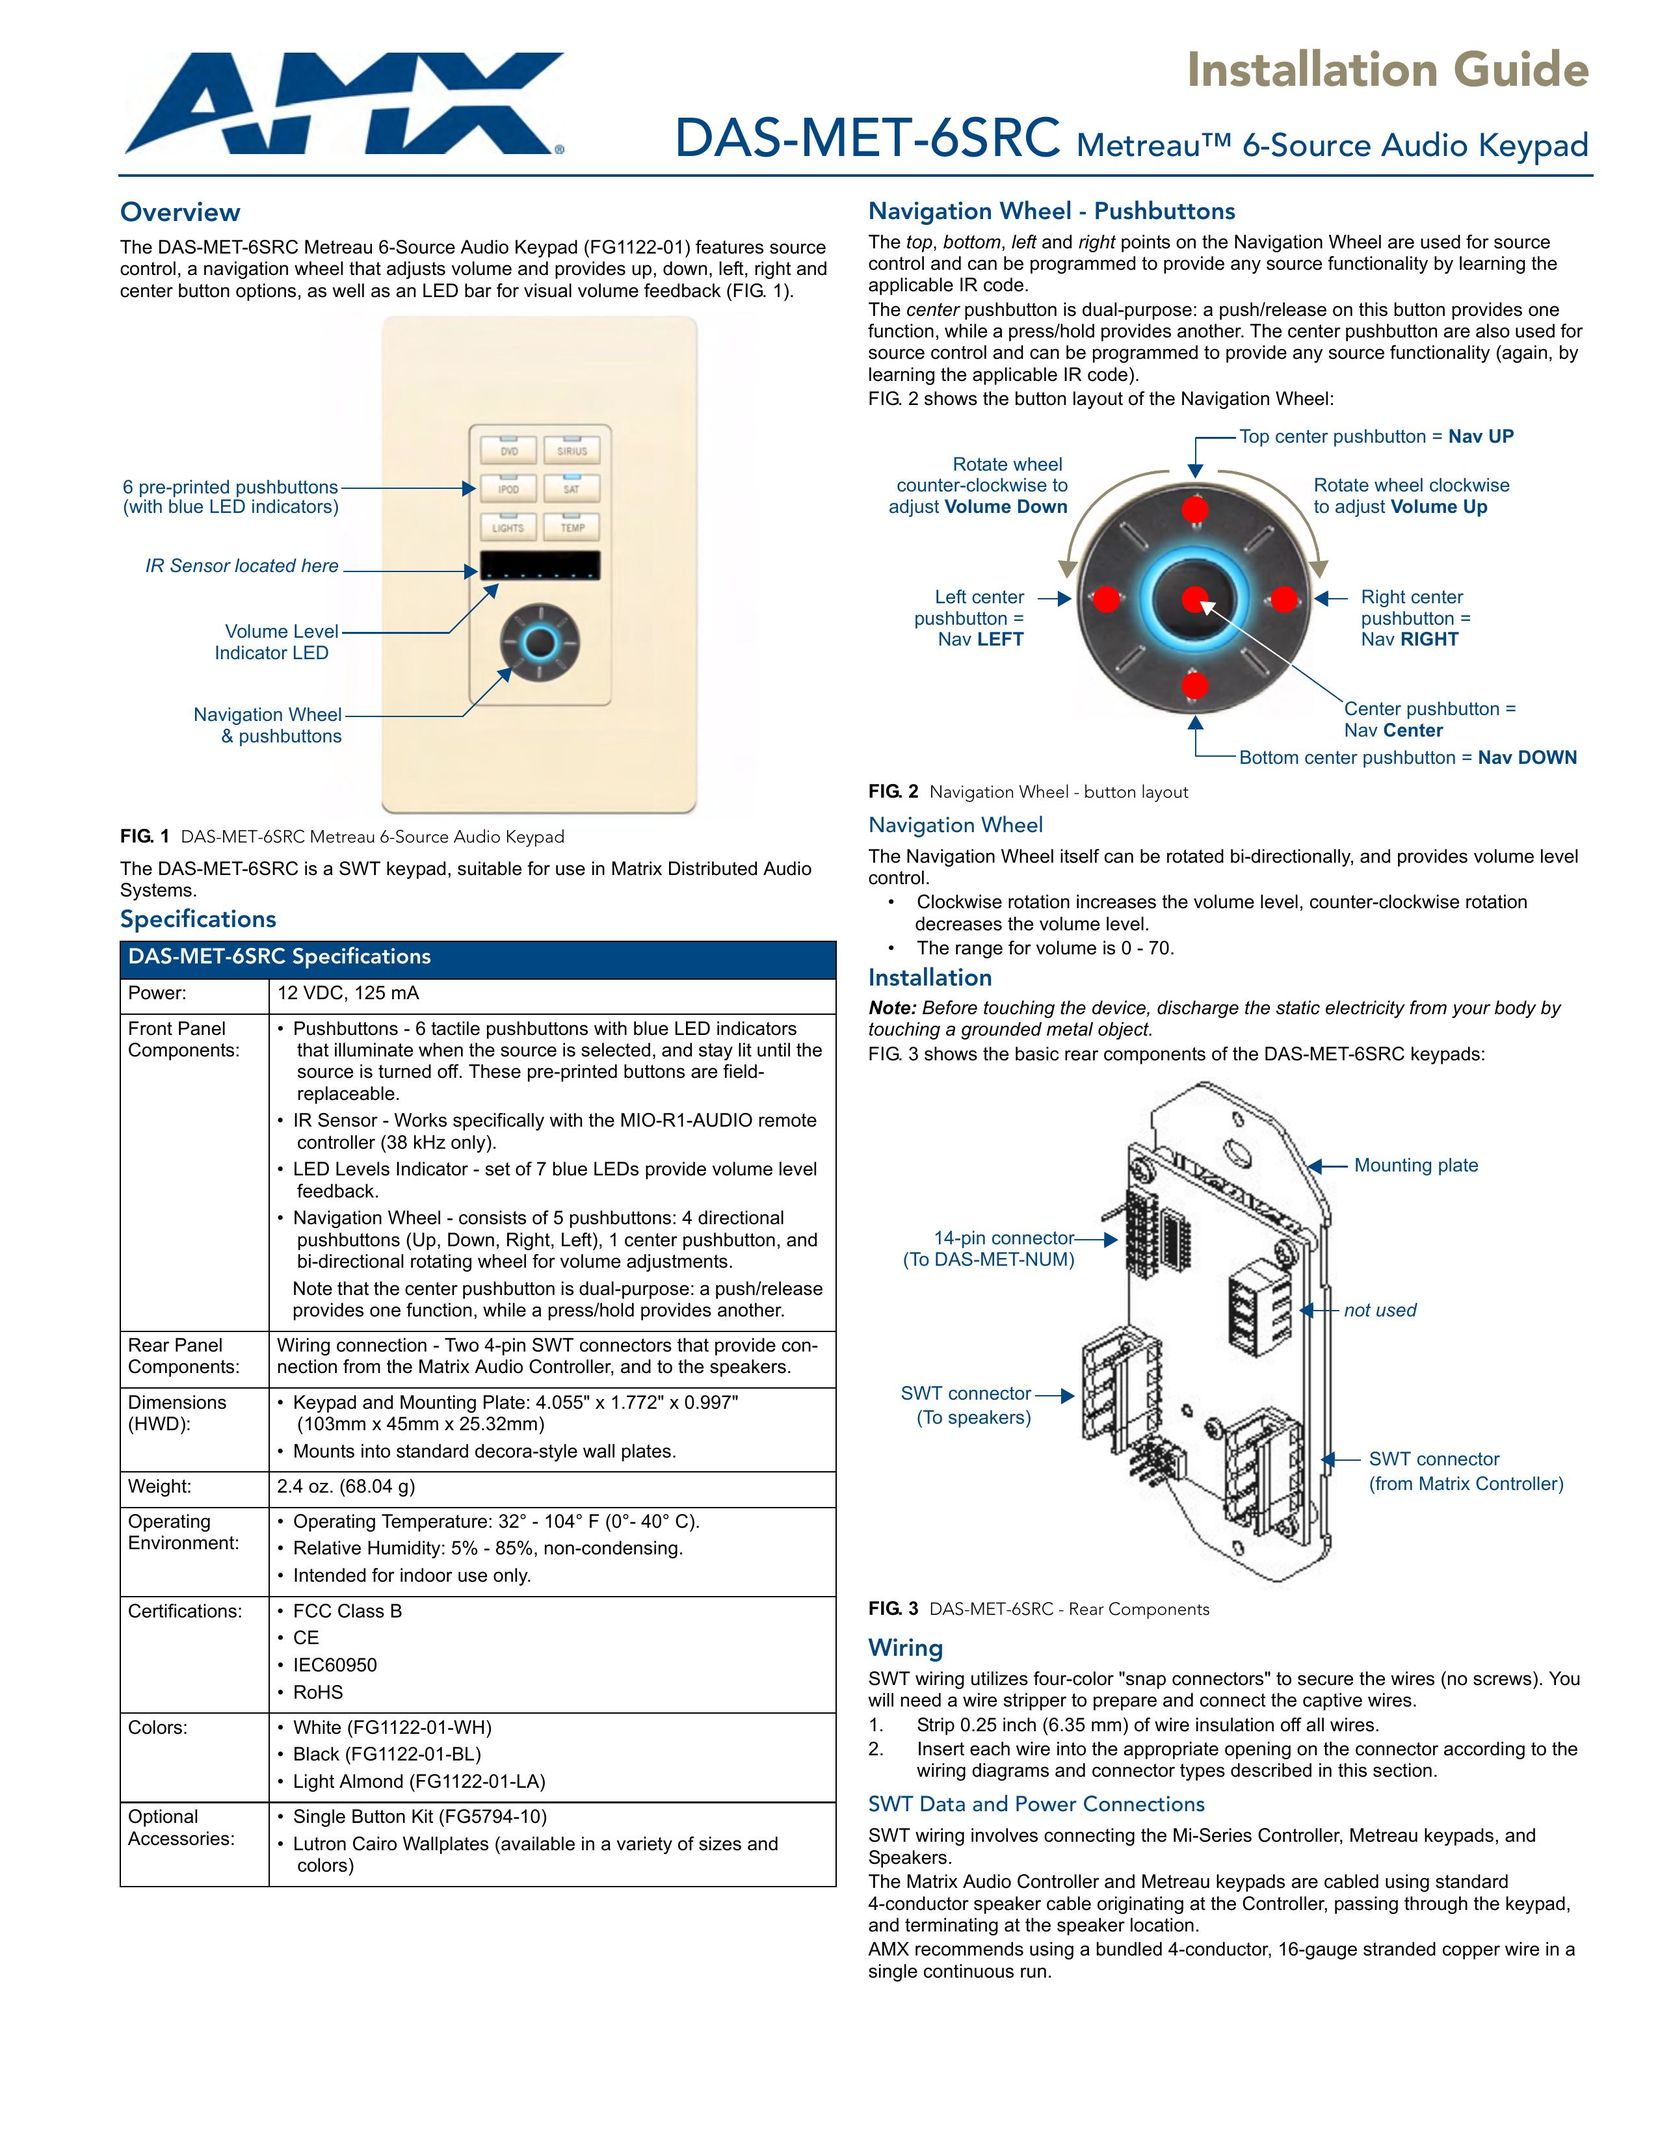 AMX DAS-MET-6SRC Stereo Receiver User Manual